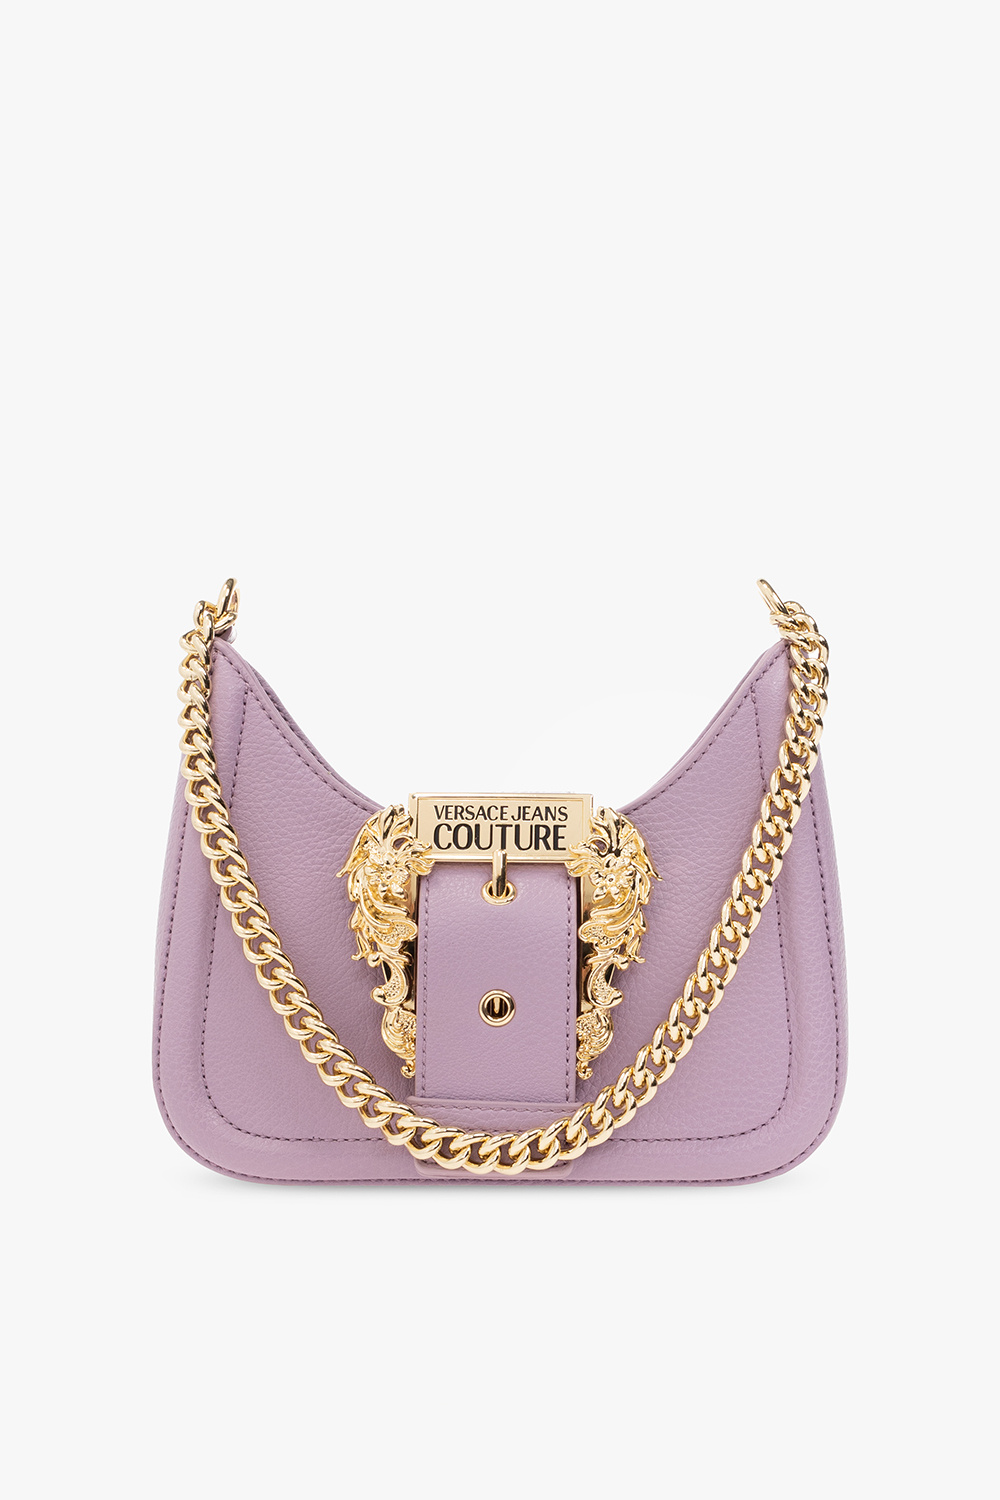 Versace Jeans Couture Purple Buckle Bag